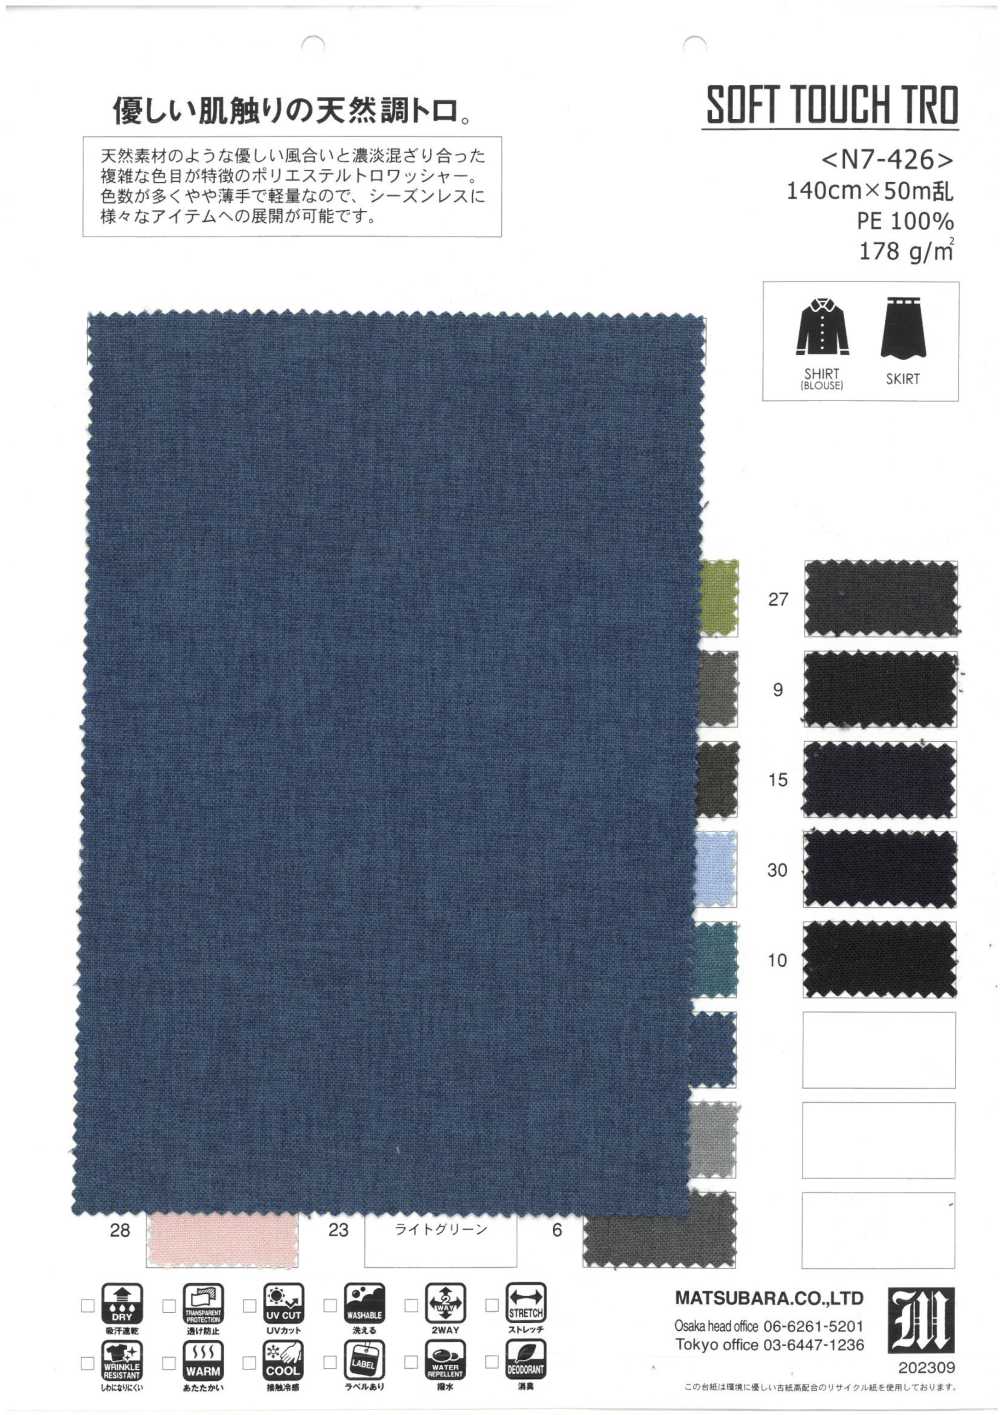 N7-426 SOFY TOUTCH TRO[Fabrica Textil] Matsubara